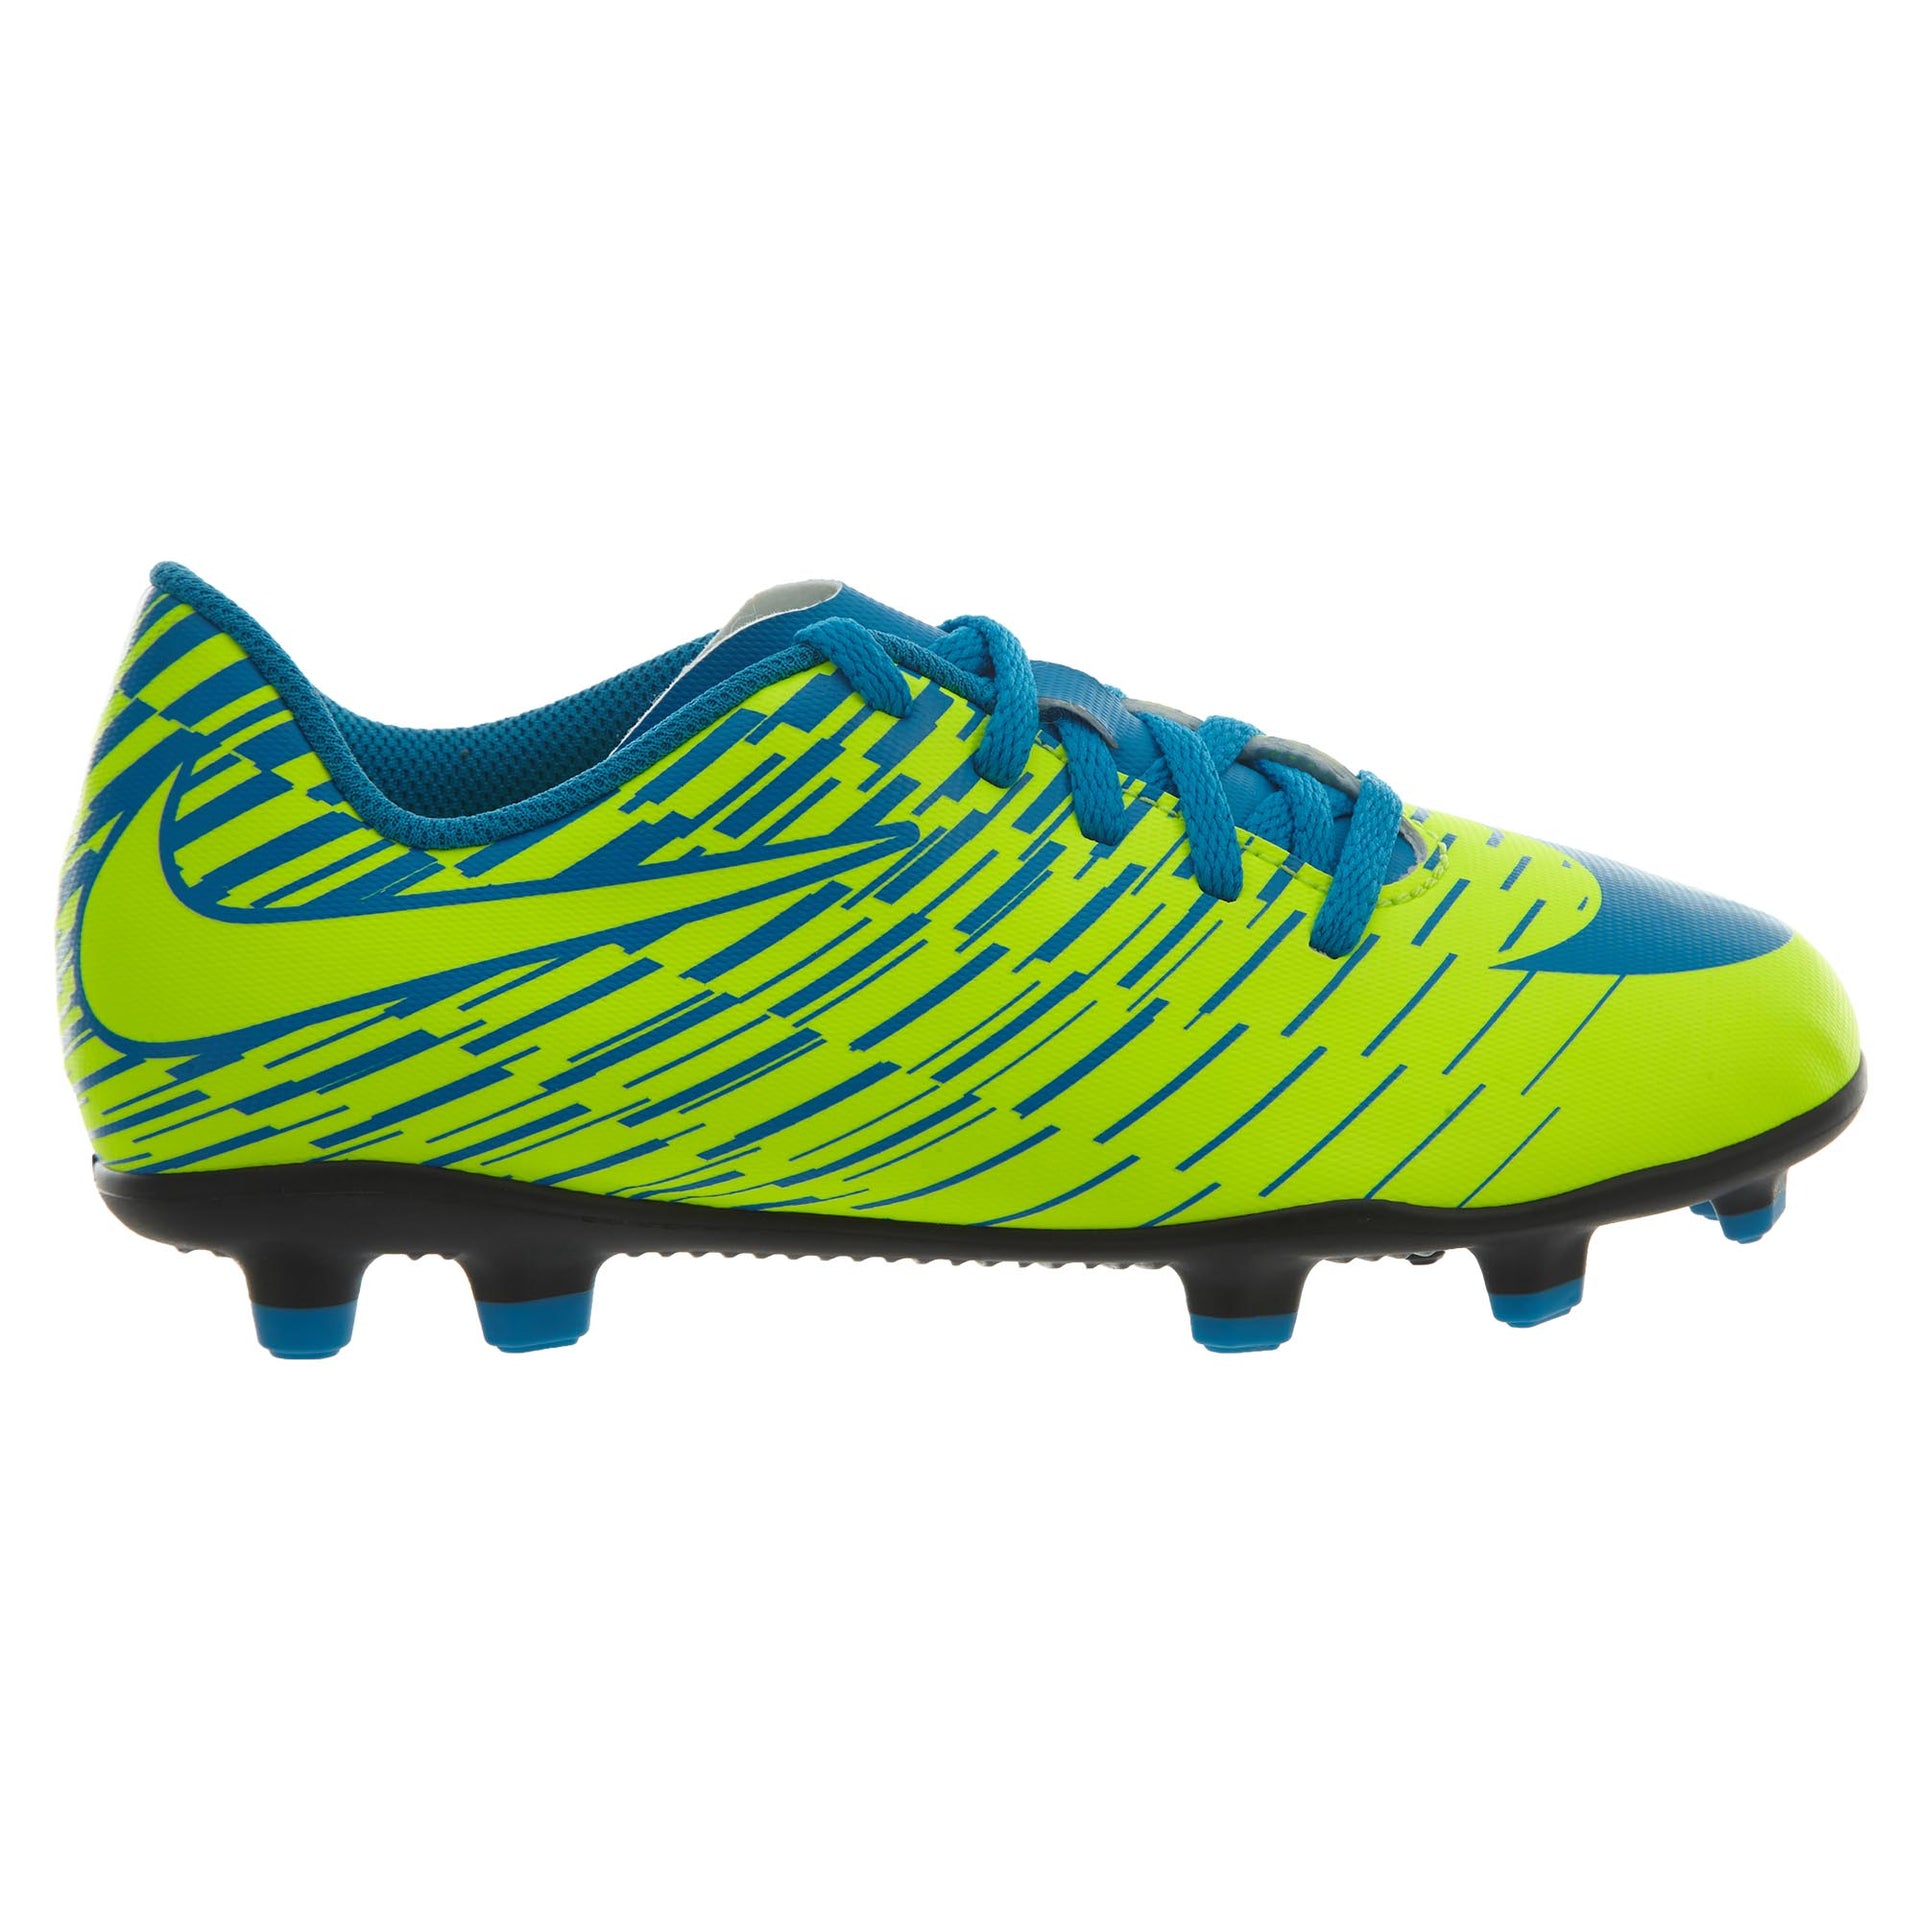 Nike Kids' Bravata II FG Soccer Cleats Boys / Girls Style :844442